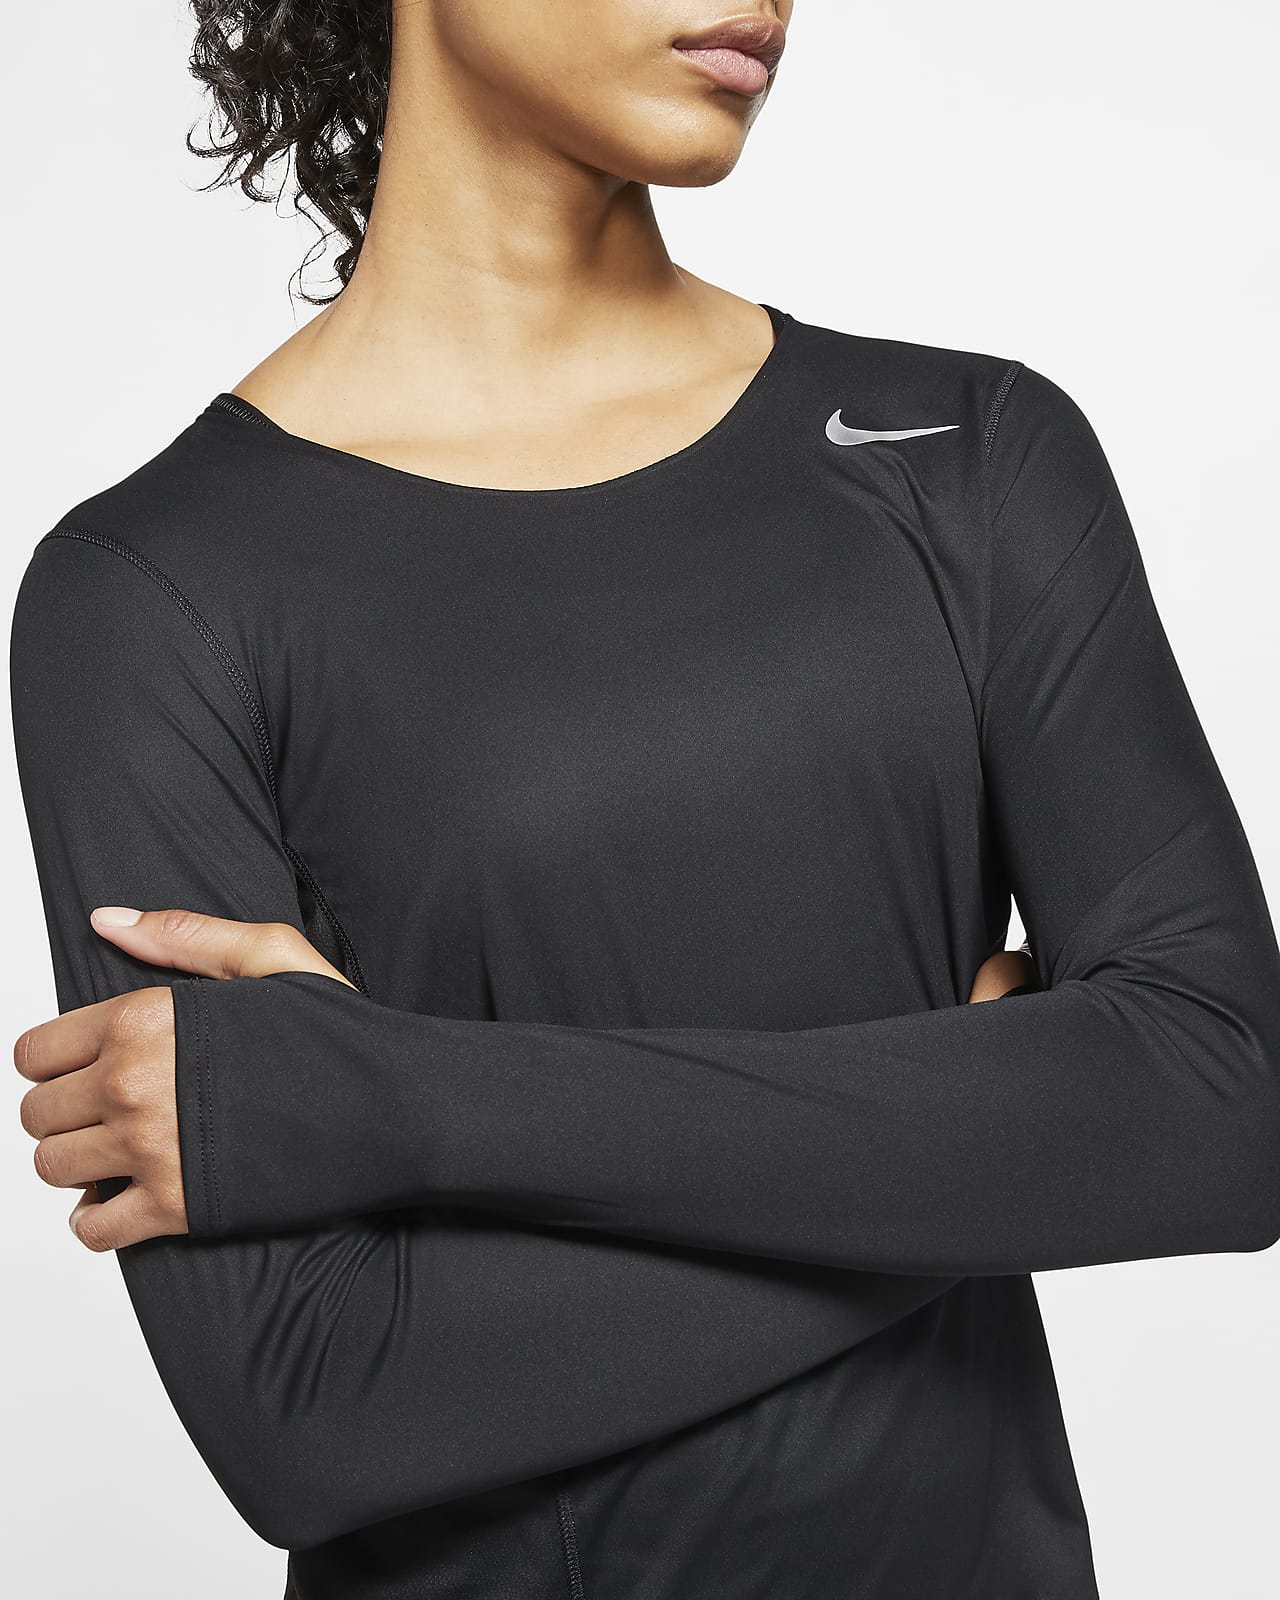 Long-Sleeve Running Top. Nike LU